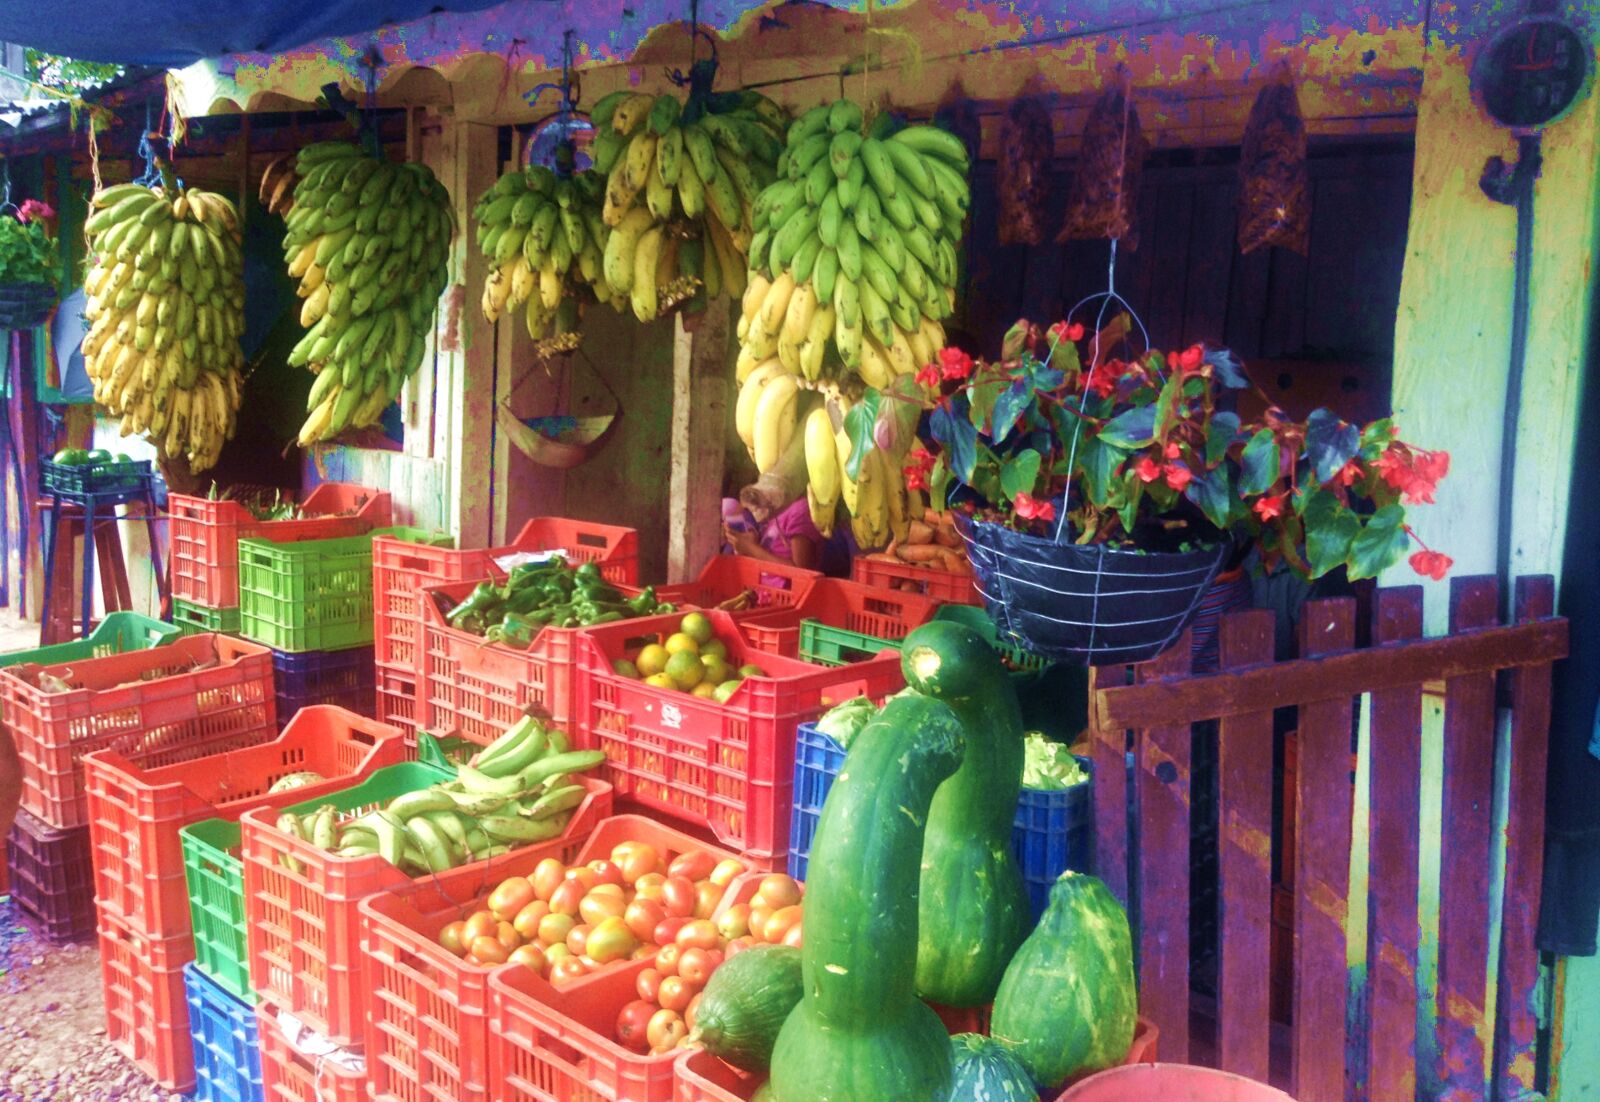 Apple iPad mini + iPad mini back camera 3.3mm f/2.4 sample photo. Bananas, fruit, tomatoes, vegetables photography